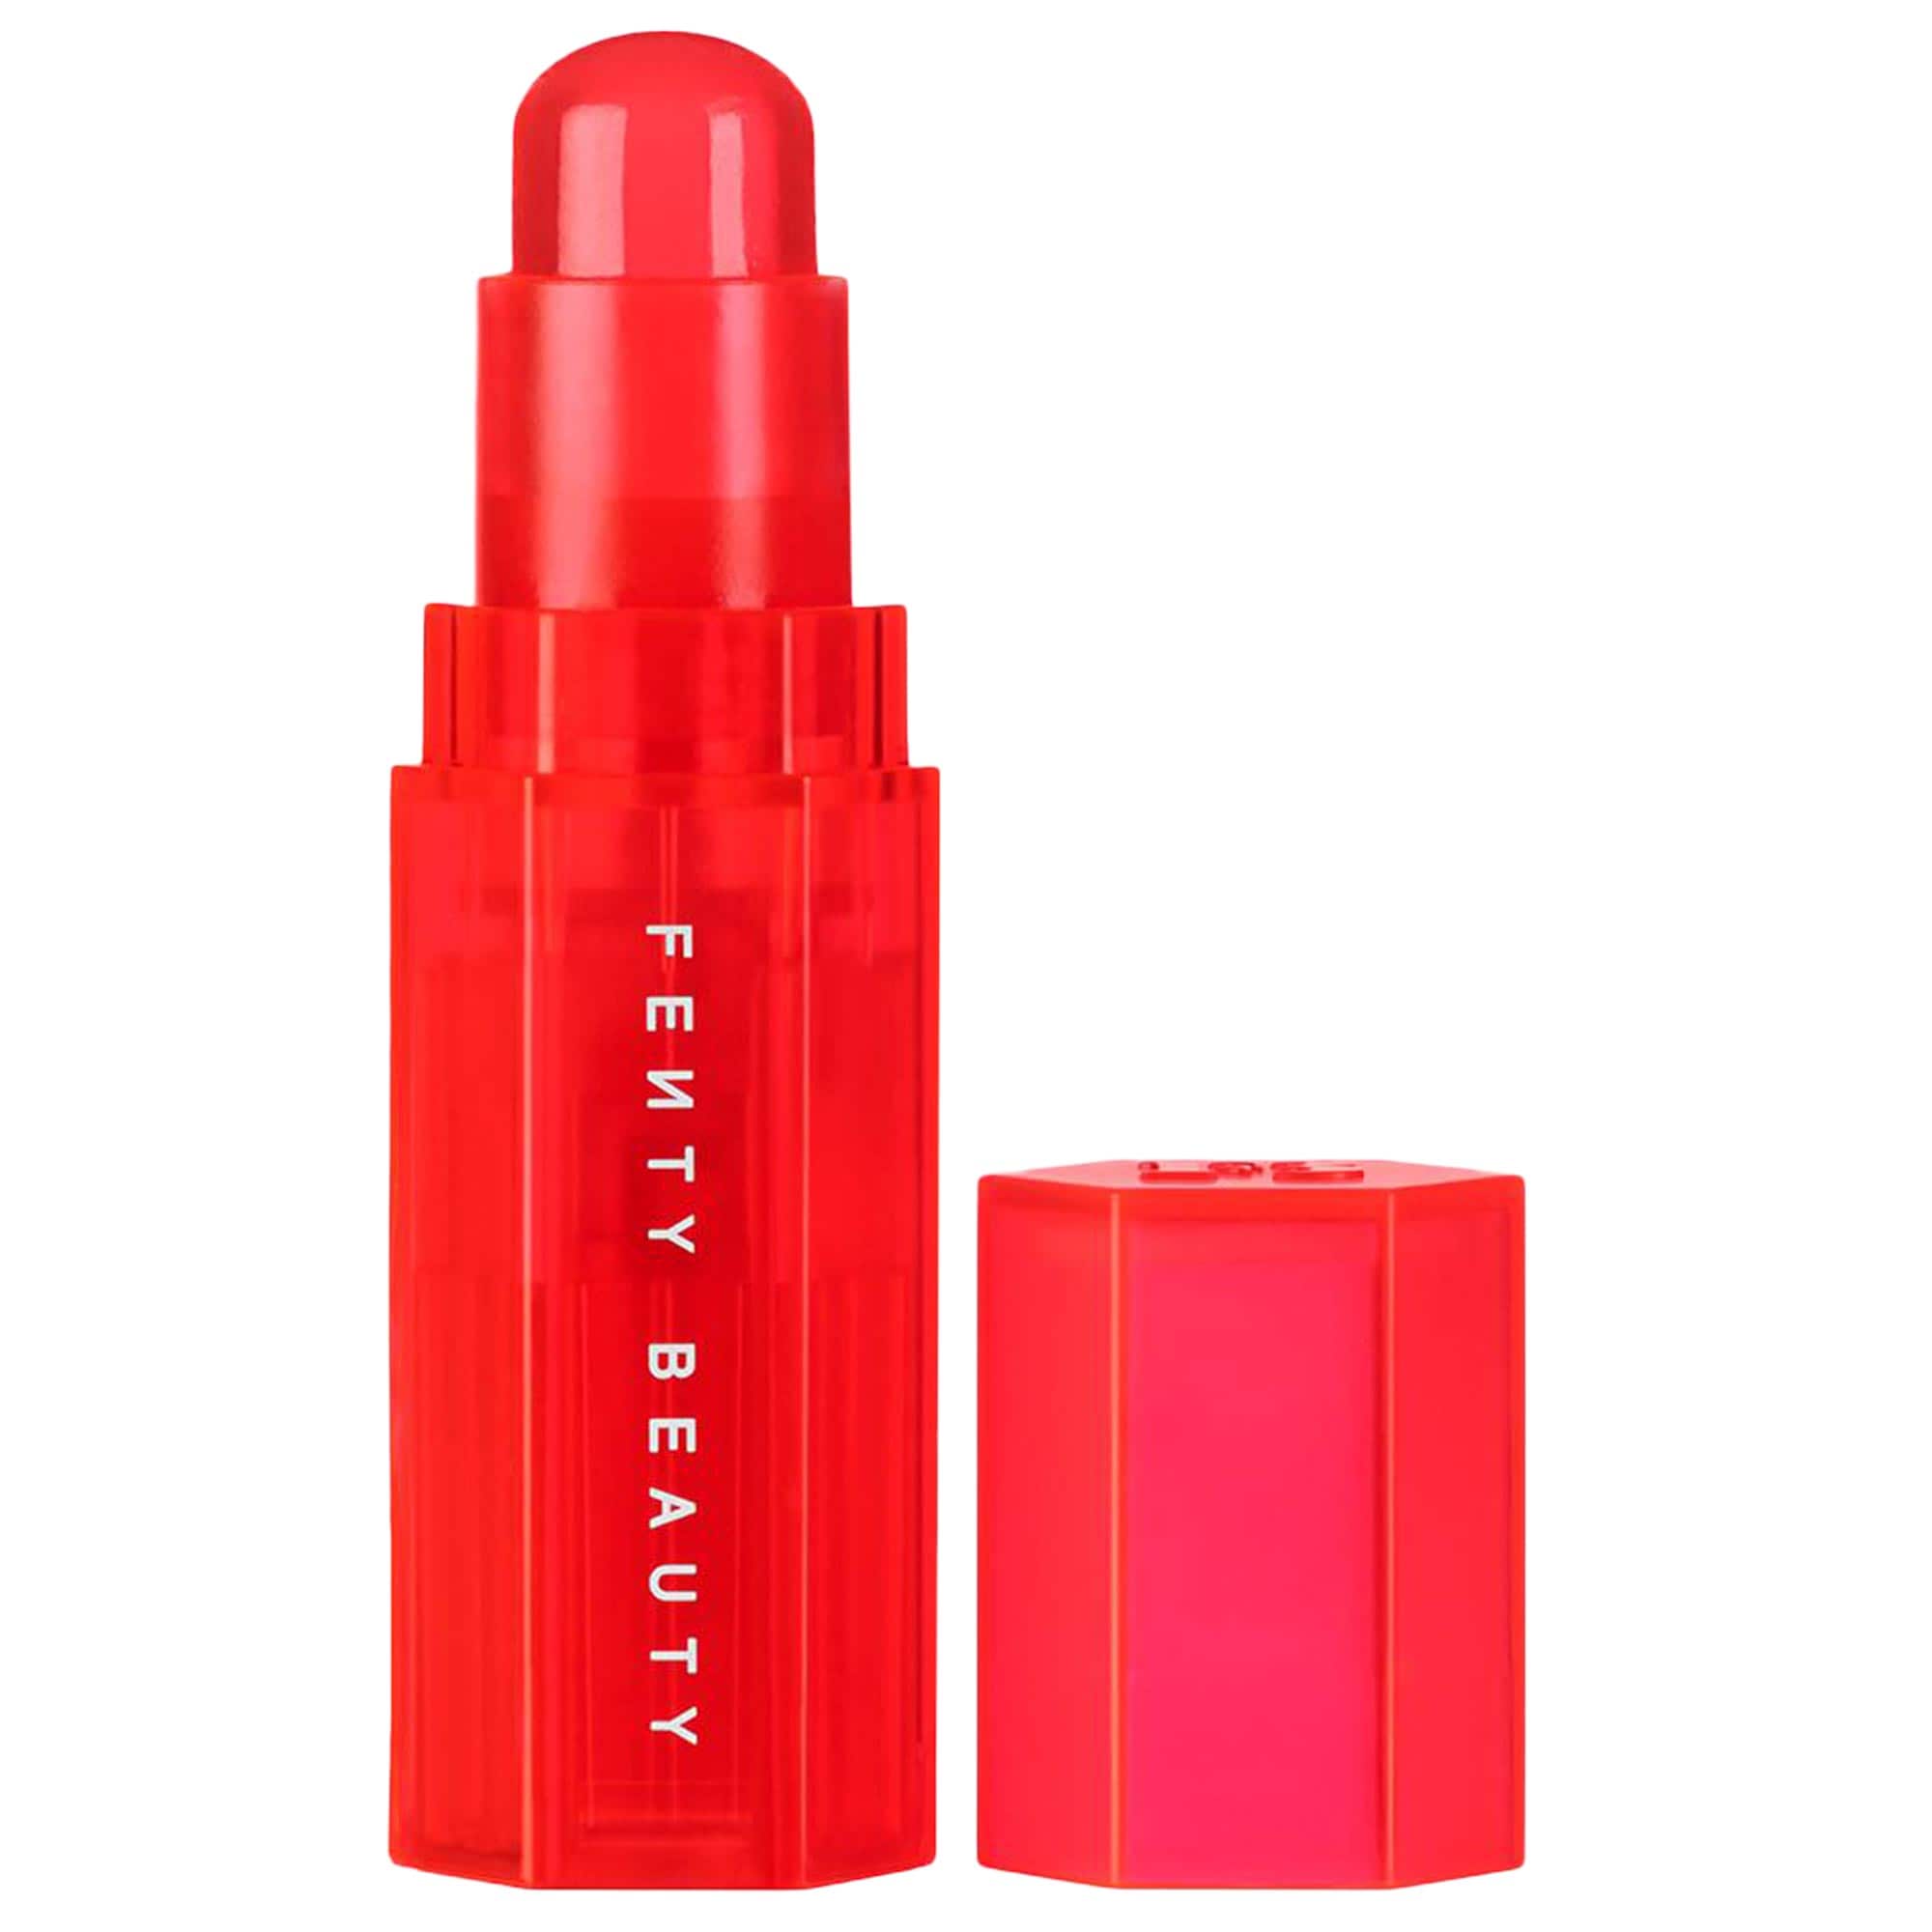 Match Stix Color-Adaptive Cheek + Lip Stick FENTY BEAUTY by Rihanna